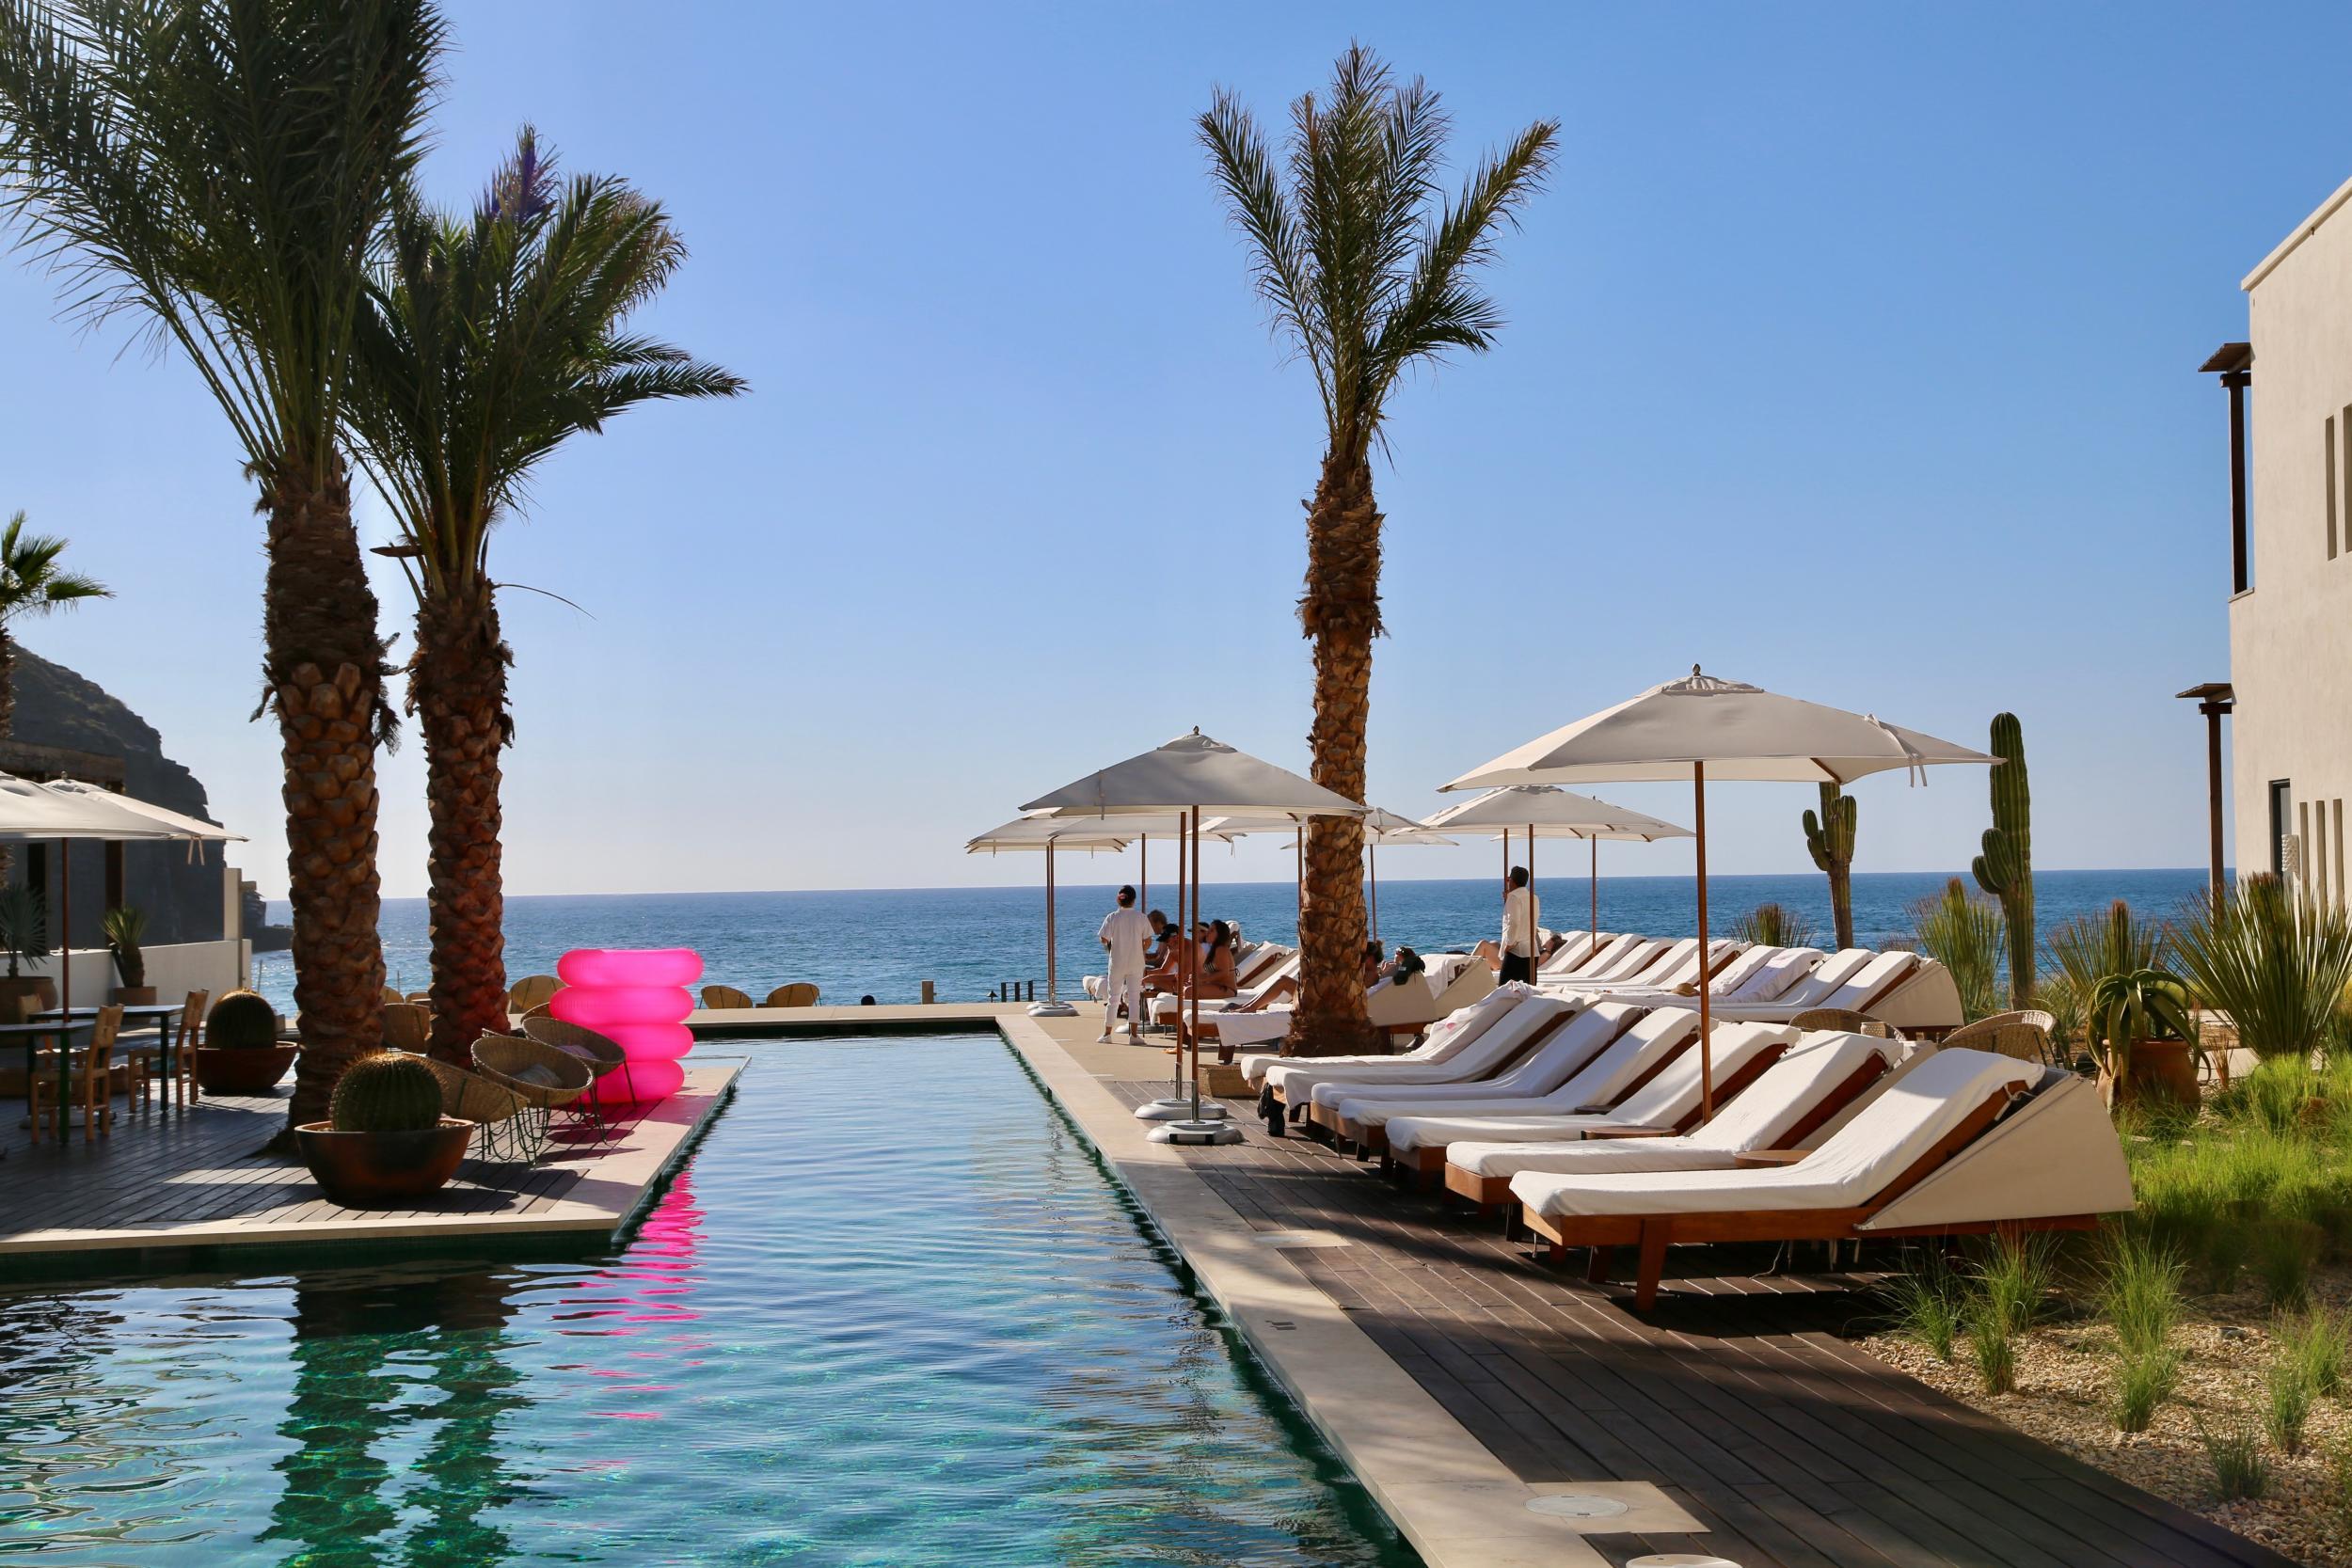 Poolside views at Hotel San Cristobal Baja